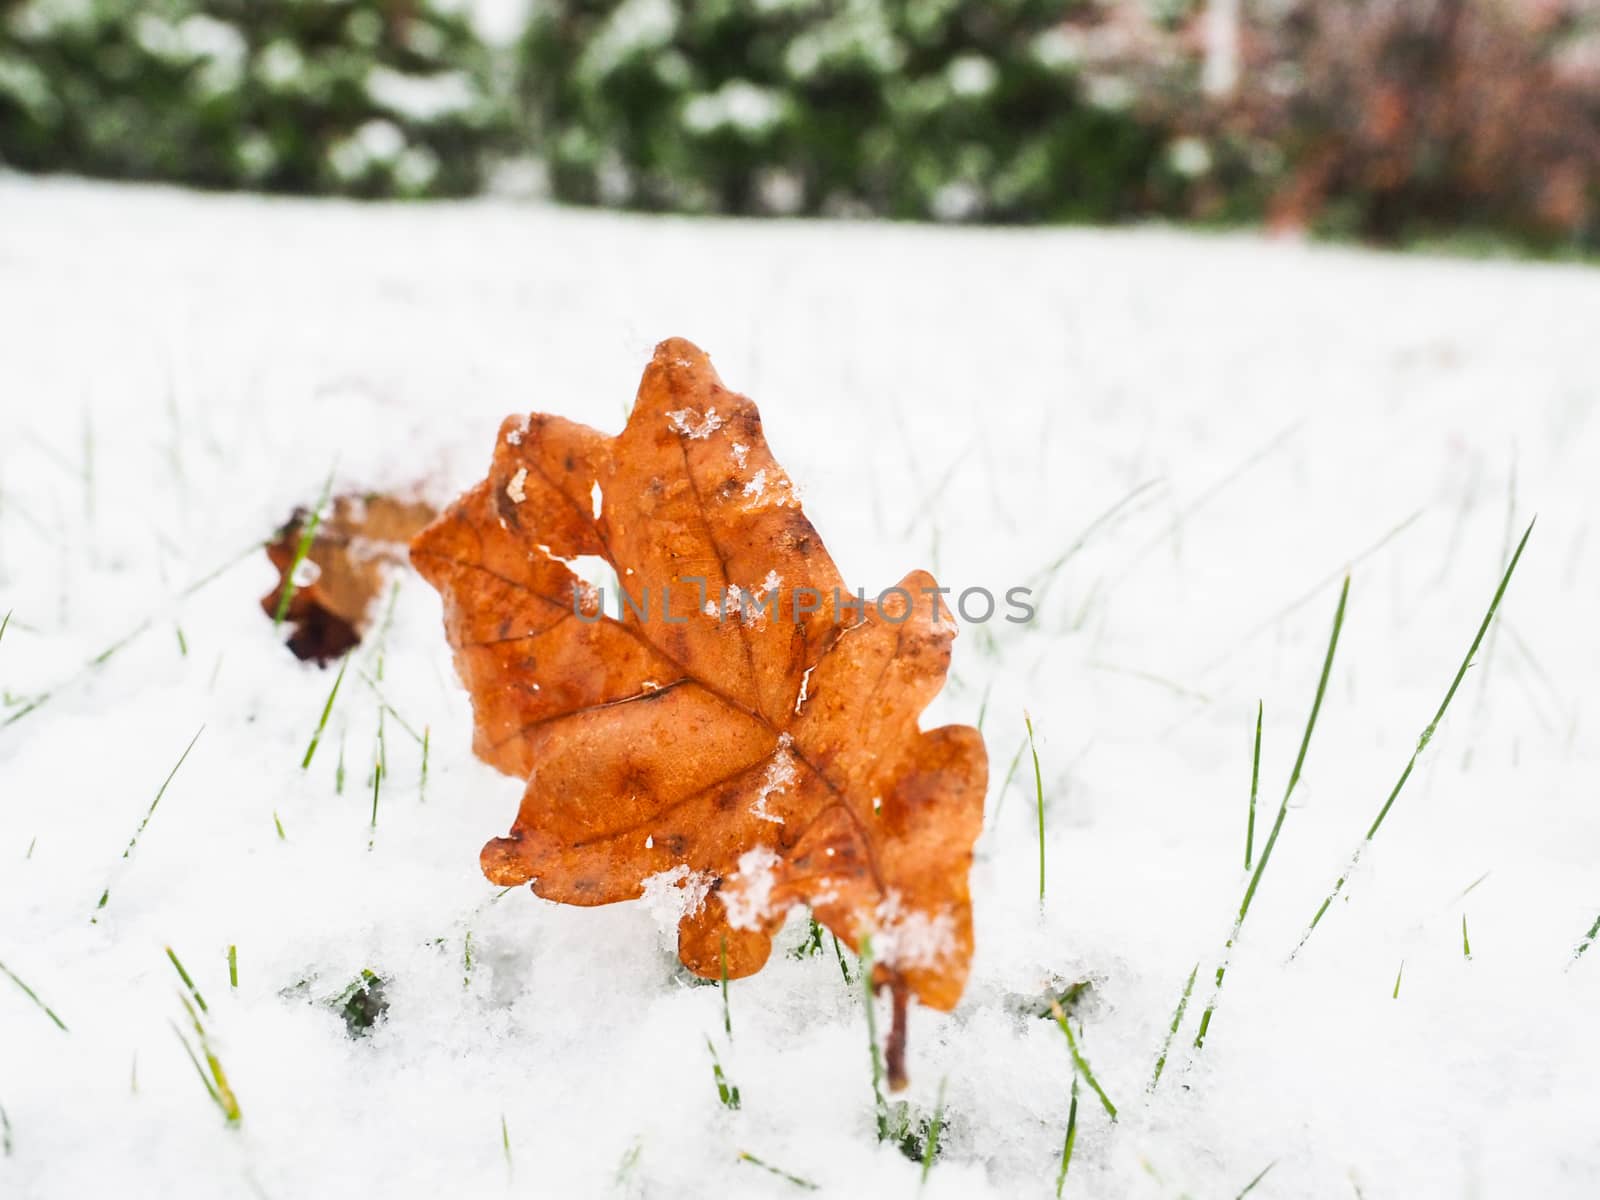 Brown oak tree leaf on lawn with a fresh layer of snow by Arvebettum